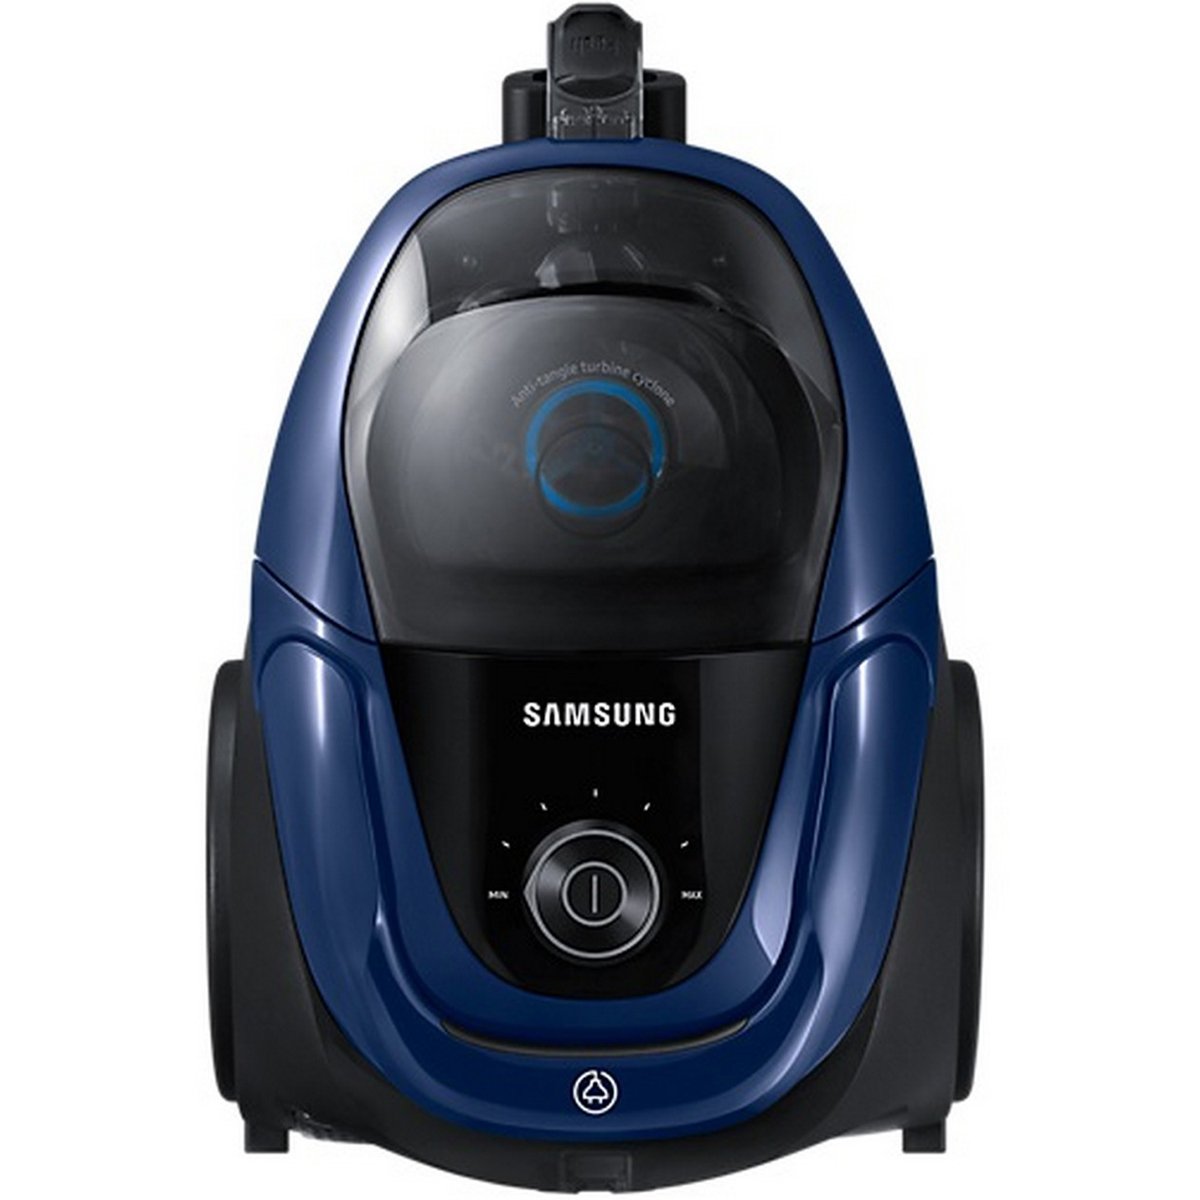 Samsung Vacuum Cleaner VC18M3110 1800W